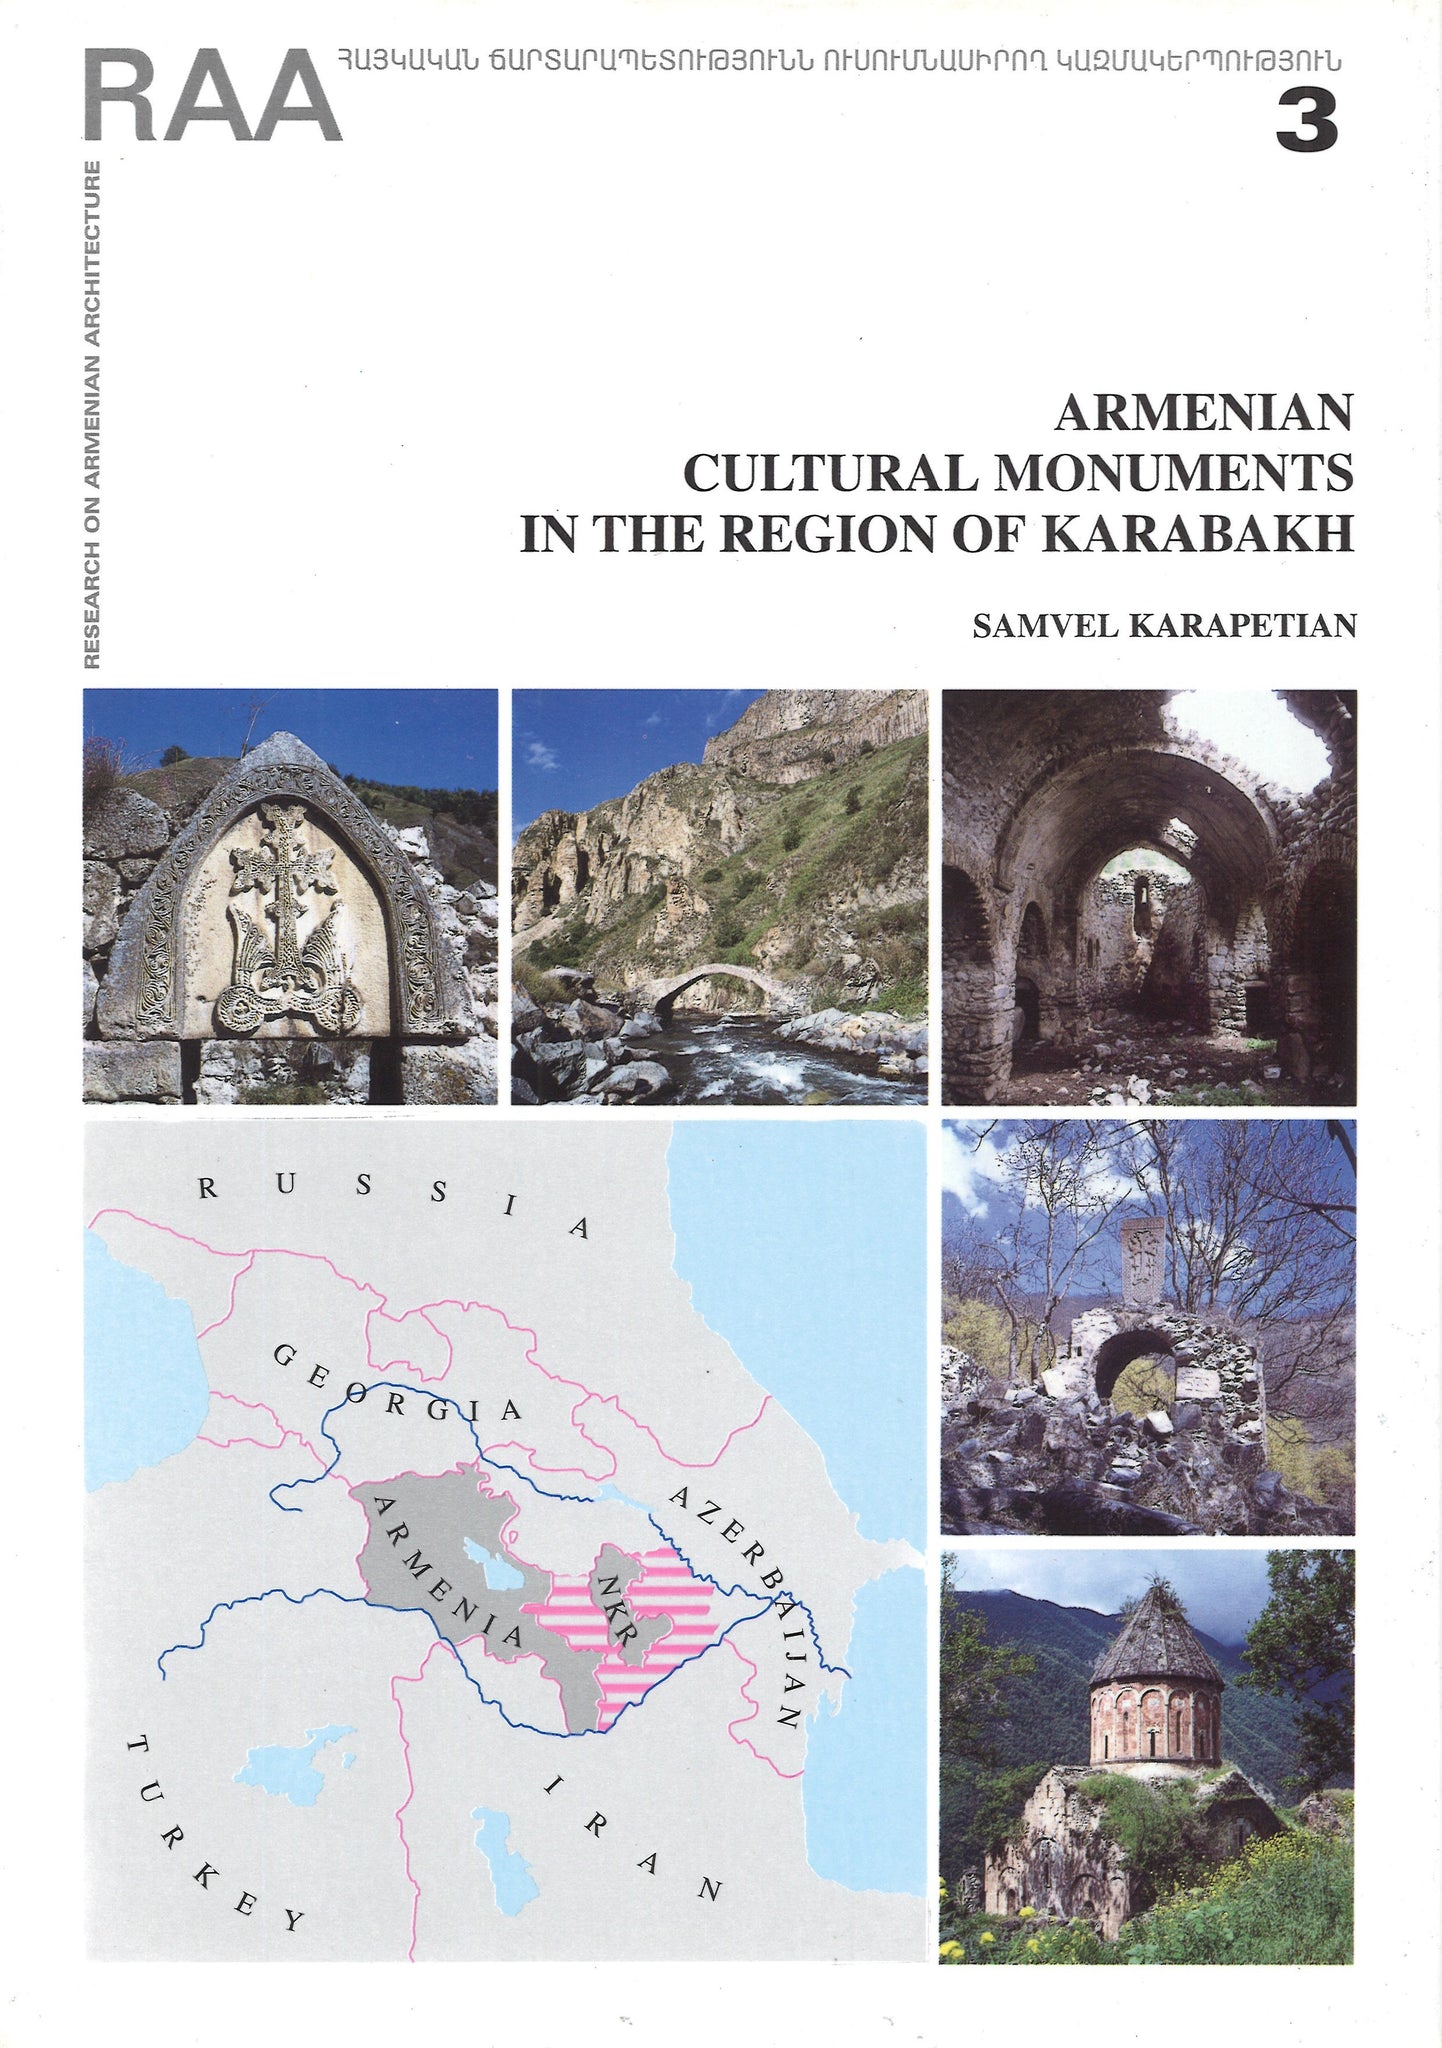 ARMENIAN CULTURAL MONUMENTS IN THE REGION OF KARABAKH